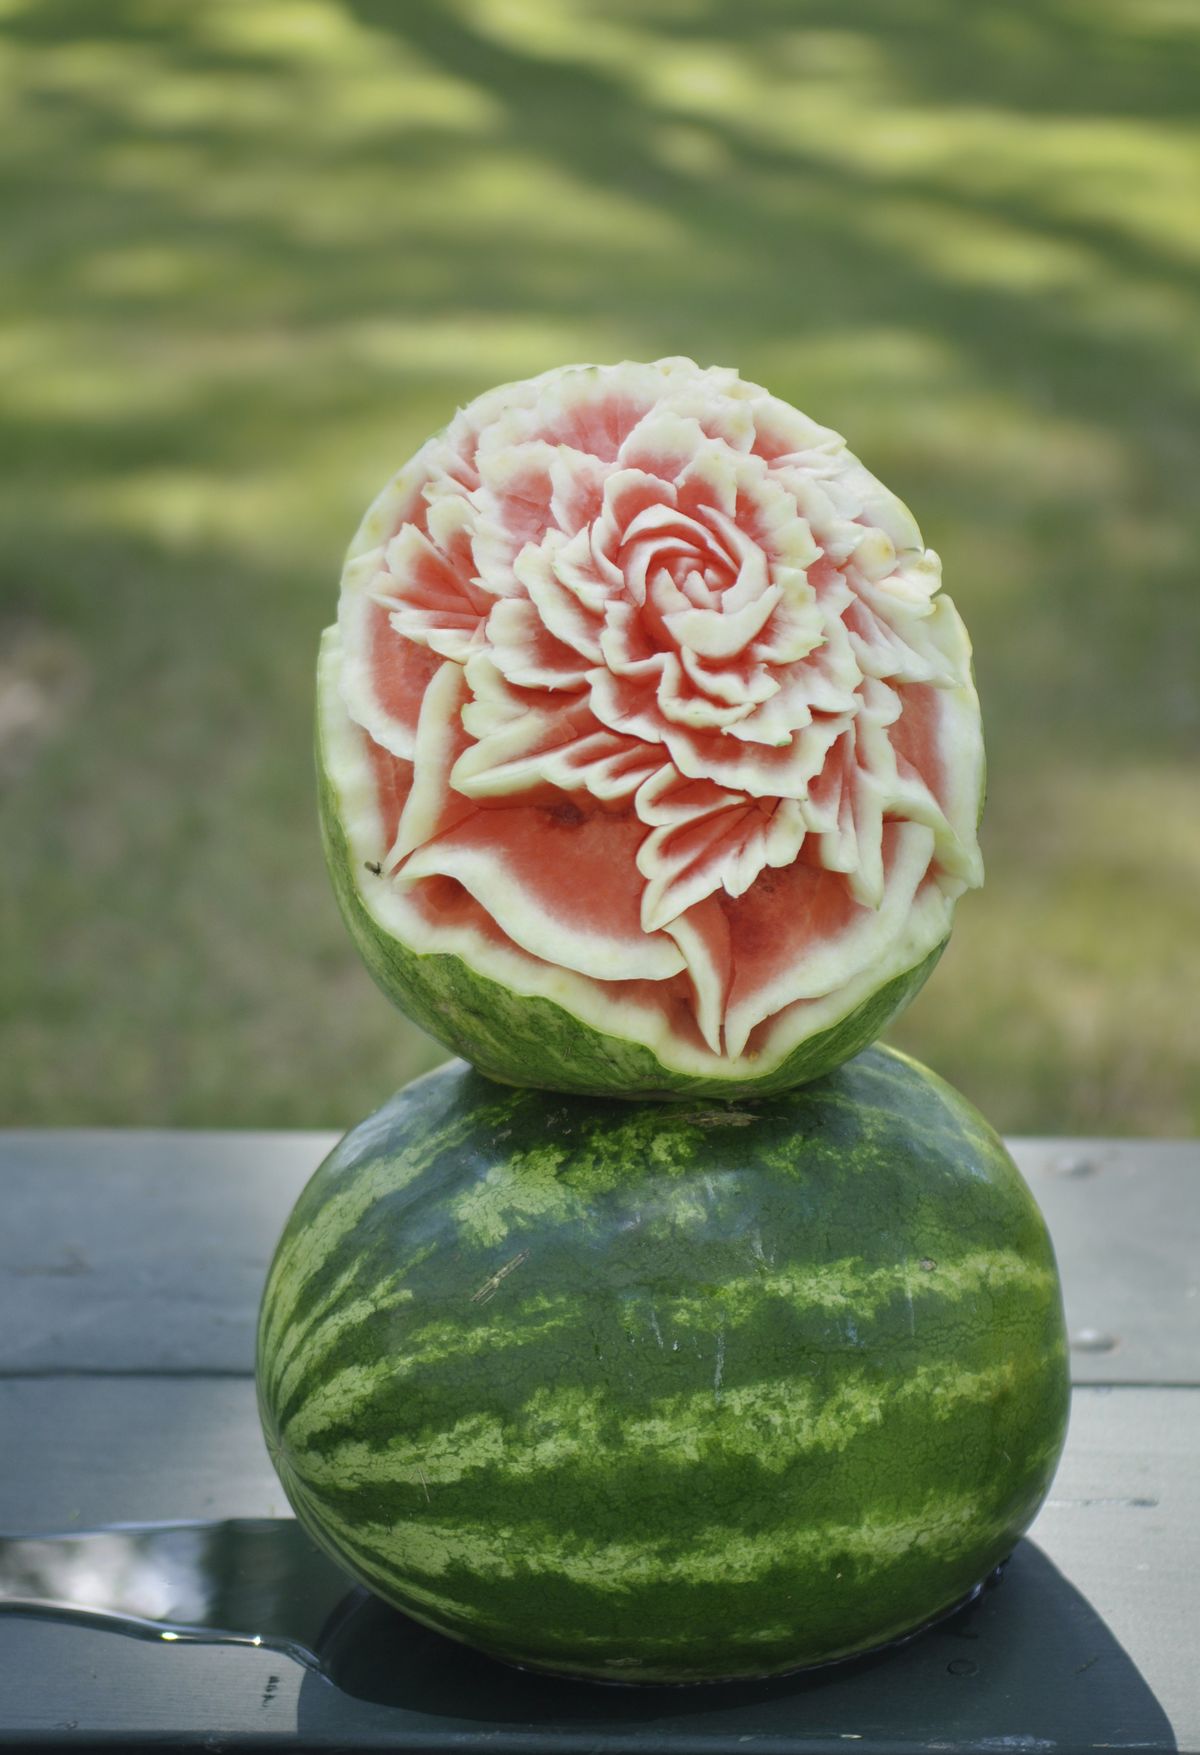 Watermelon carver Ryan Allison is a 2013 graduate of the Spokane Community College culinary program. (Adriana Janovich)